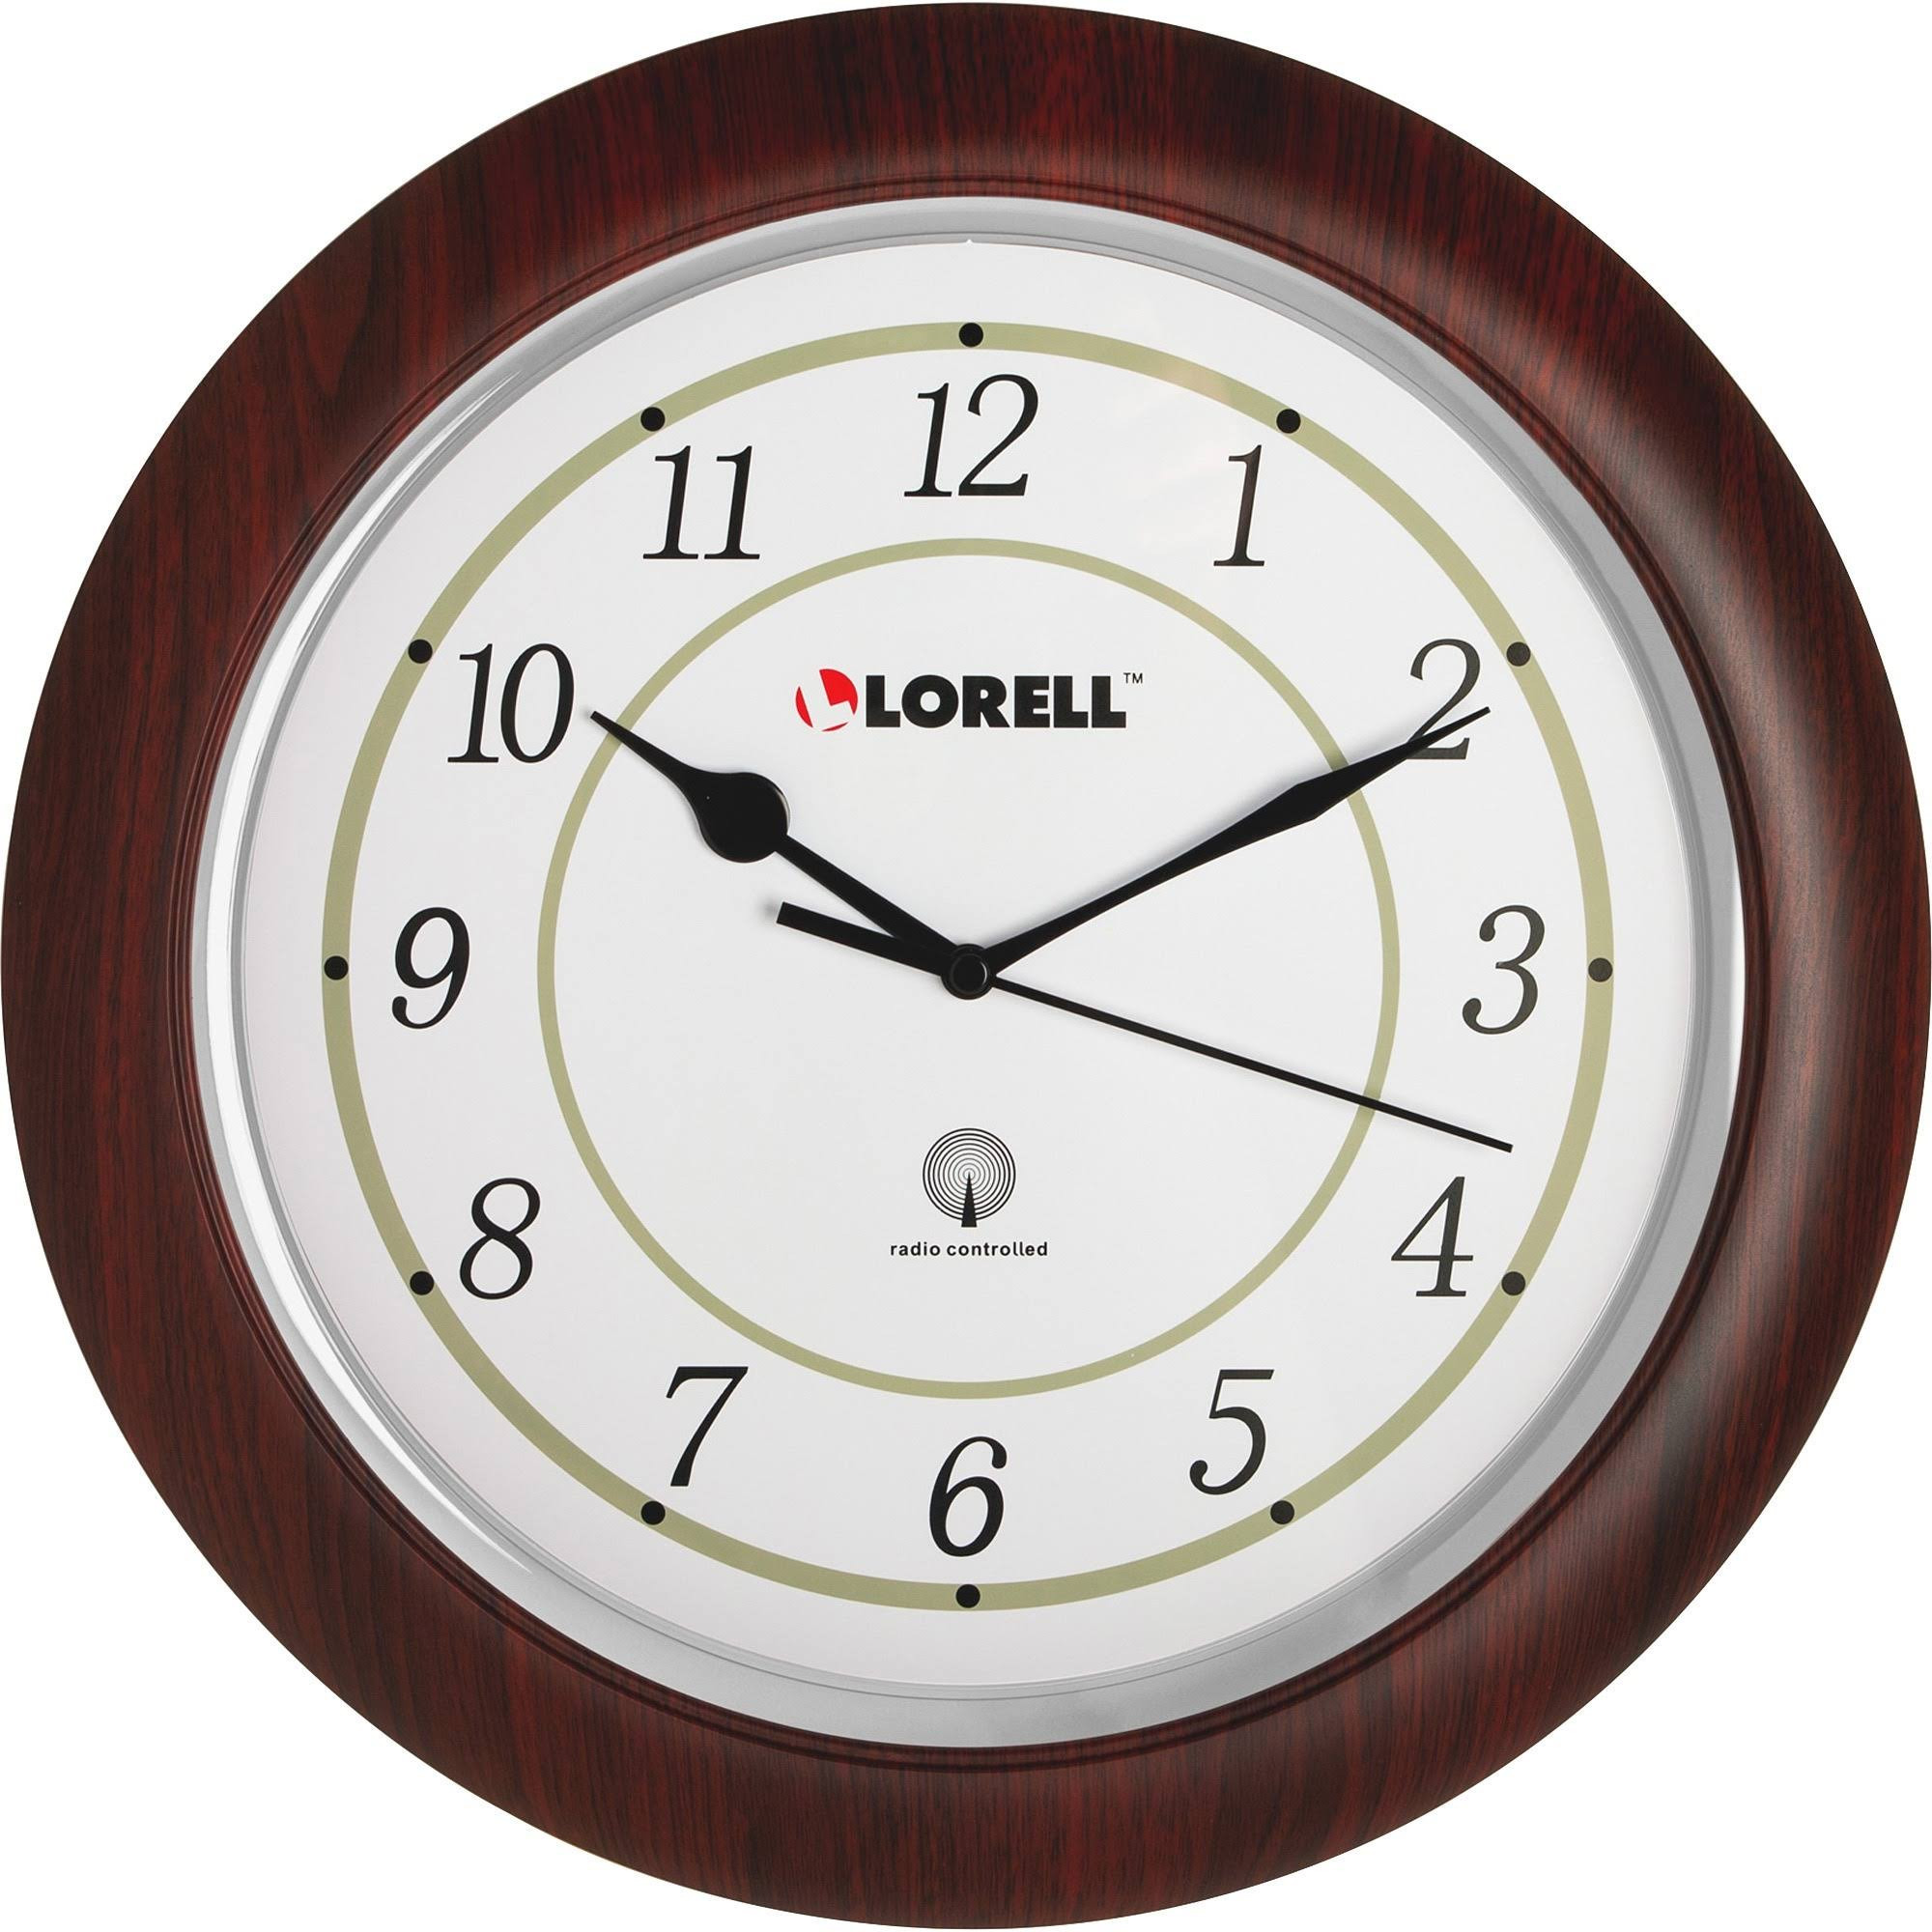 Lorell Radio Control Wall Clock Thebeastshops